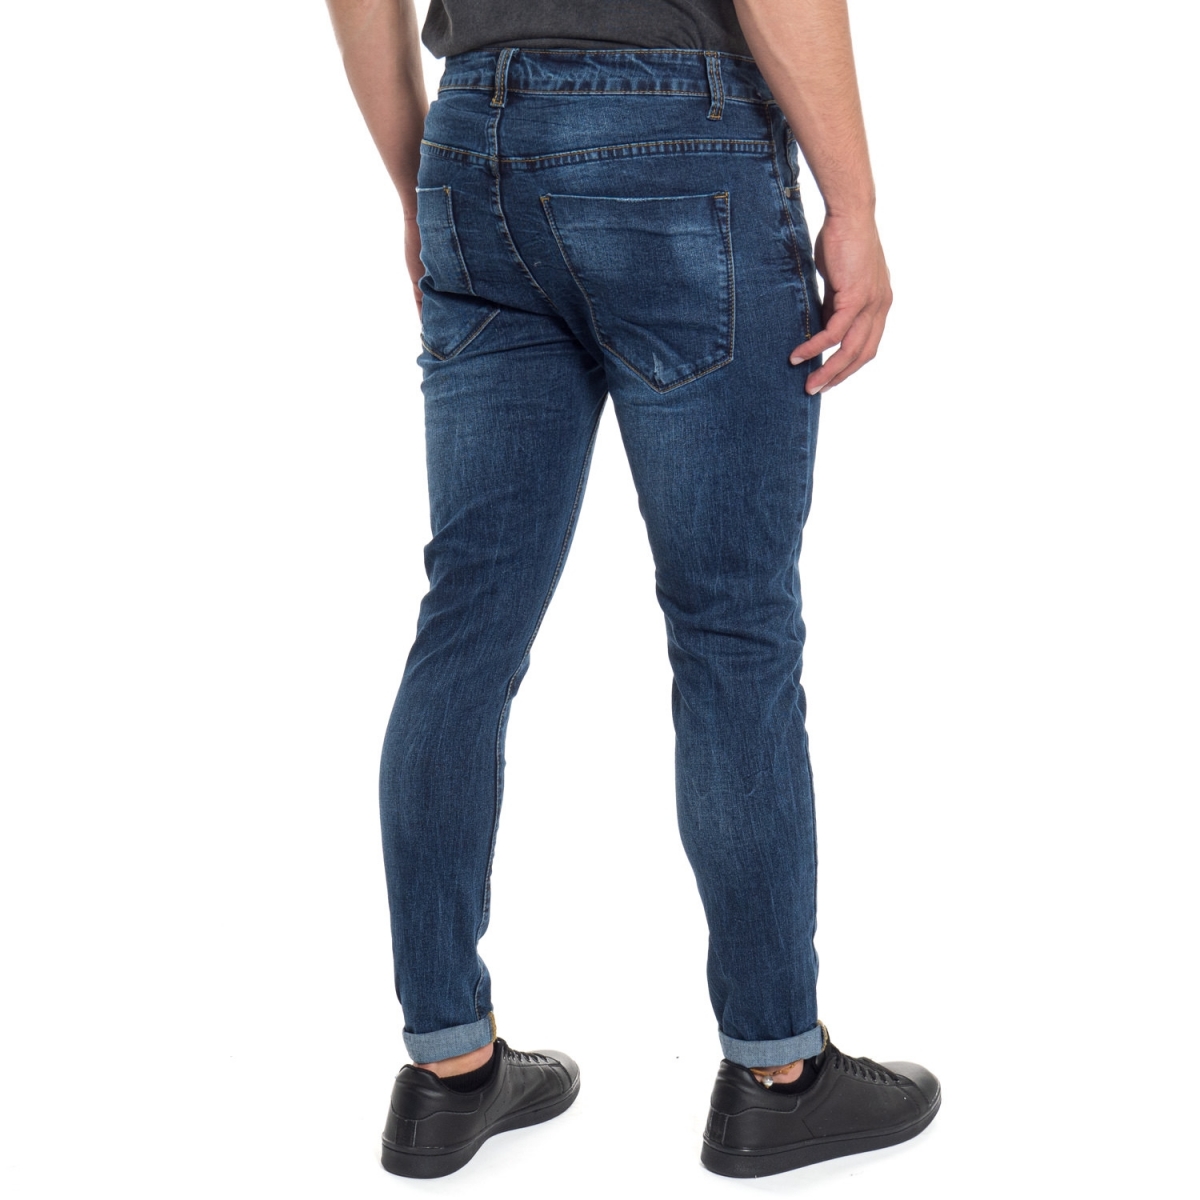 Kleidung Jeans mann Jeans LPM2202 LANDEK PARK Cafedelmar Shop